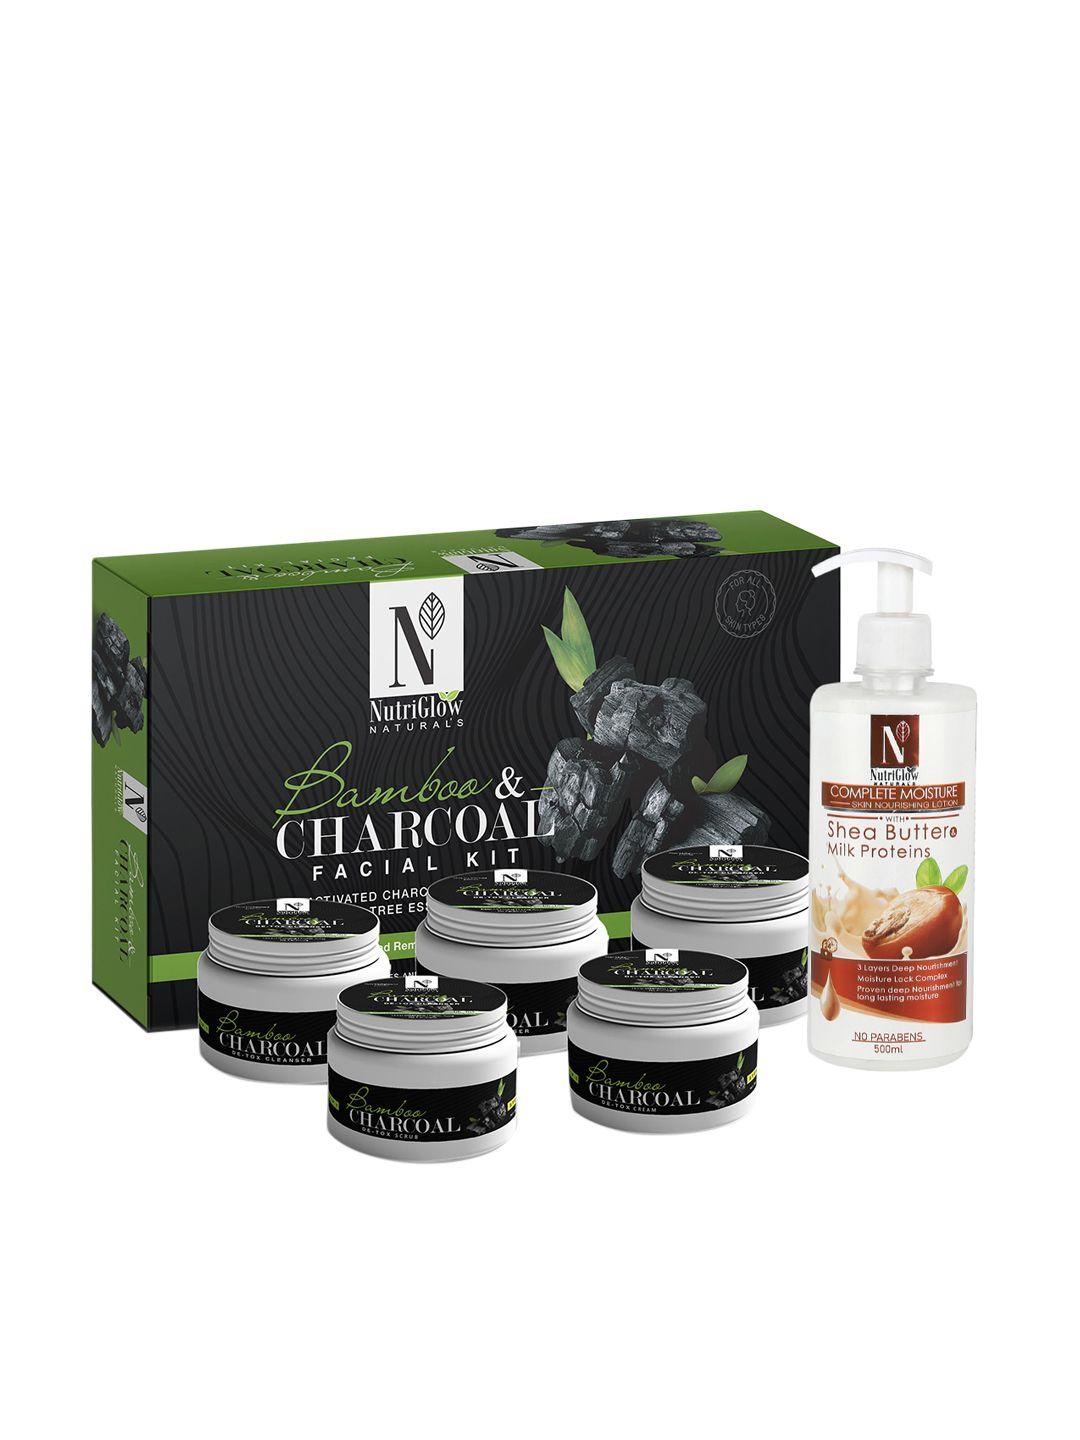 nutriglow naturals bamboo charcoal facial kit 250g+10ml & shea butter body lotion 500ml